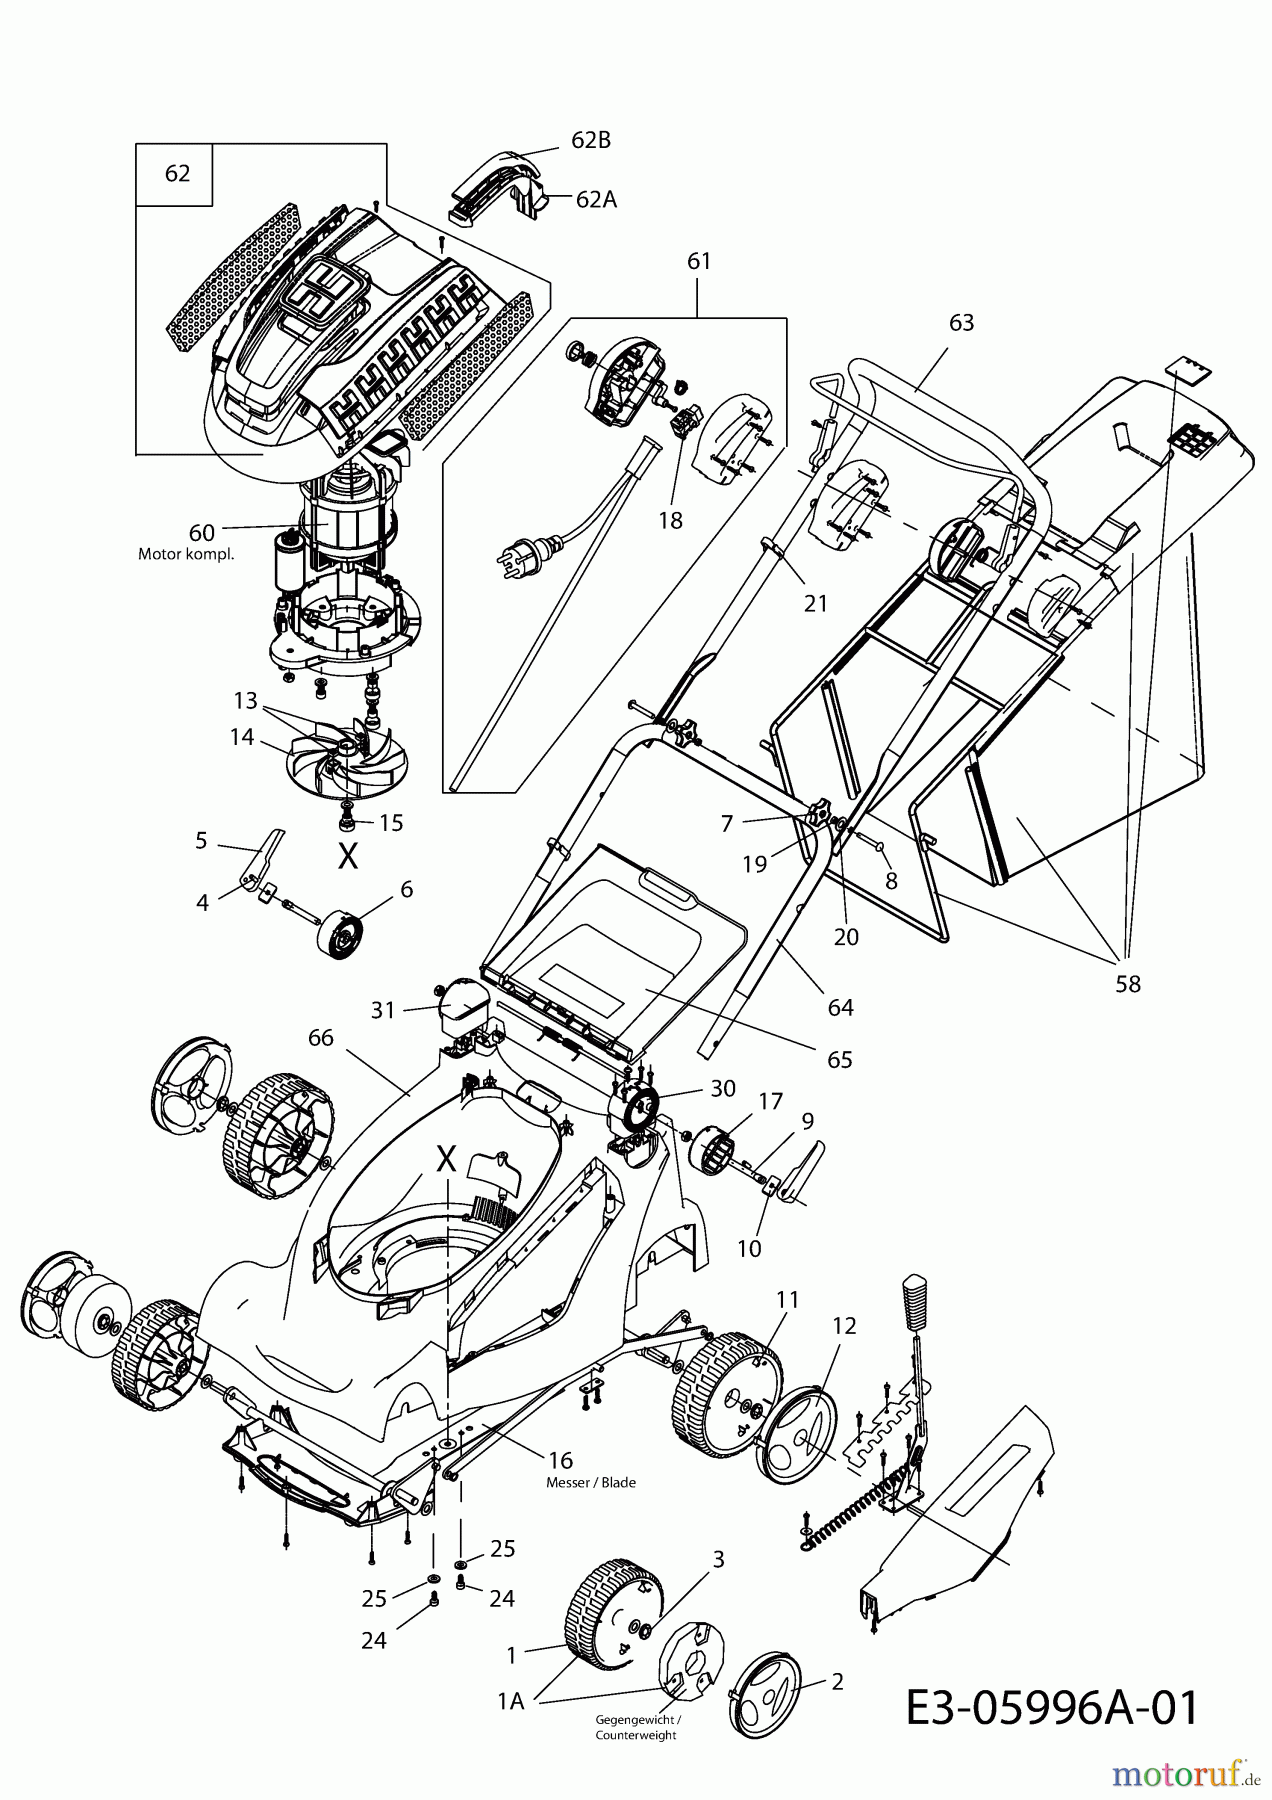  Plantiflor Electric mower ER 1842-1 18BCE4L2601  (2015) Basic machine